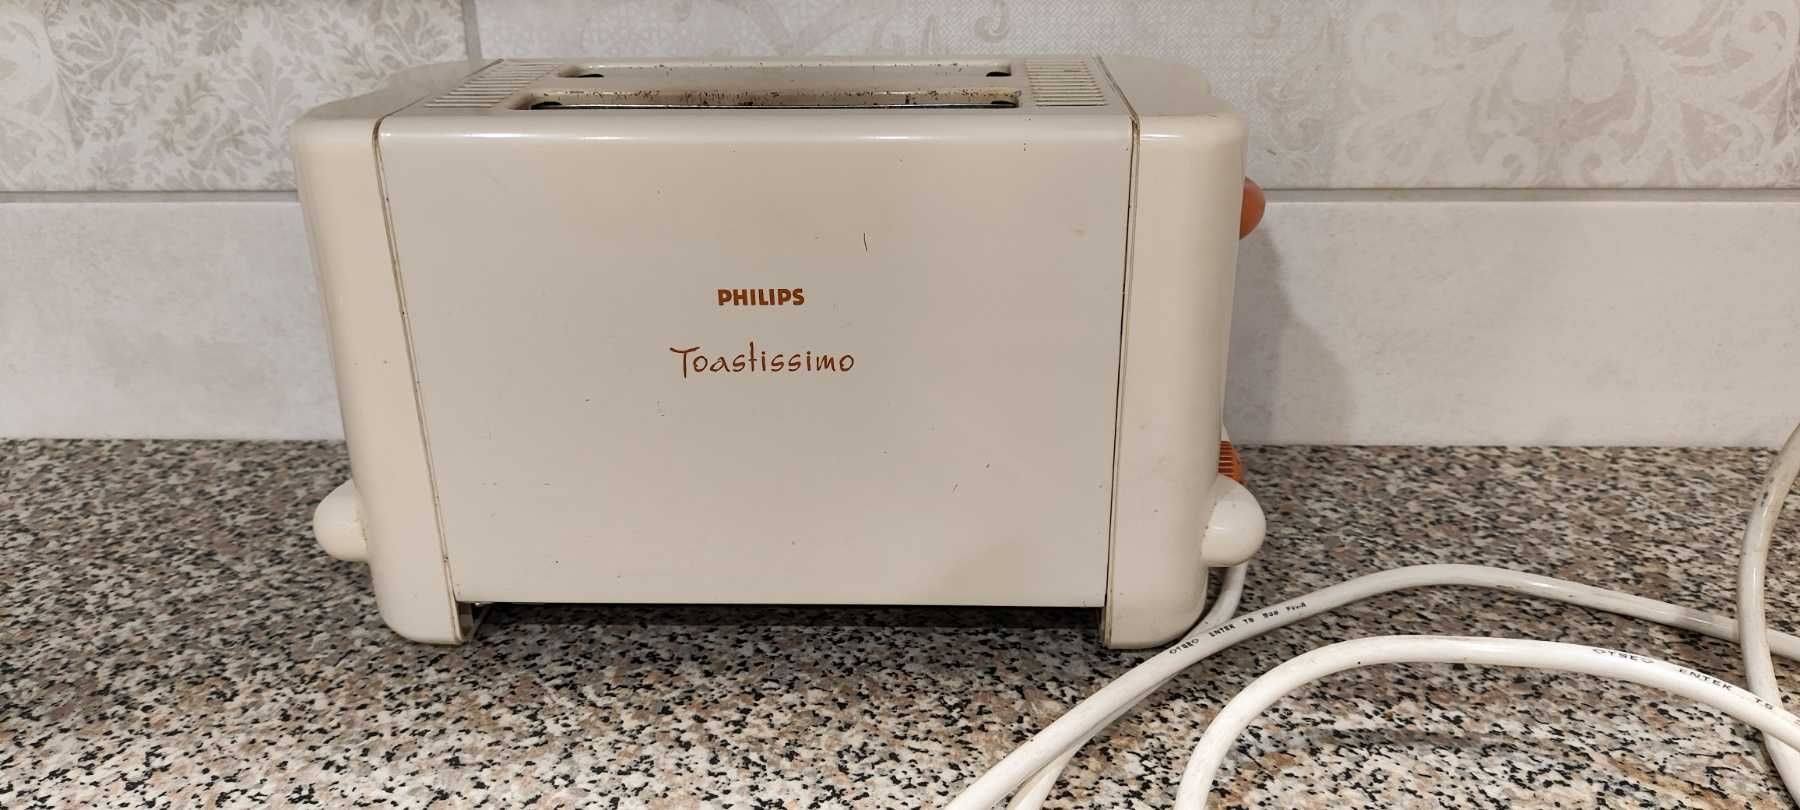 Продам тостер  Philips HD 4815/А